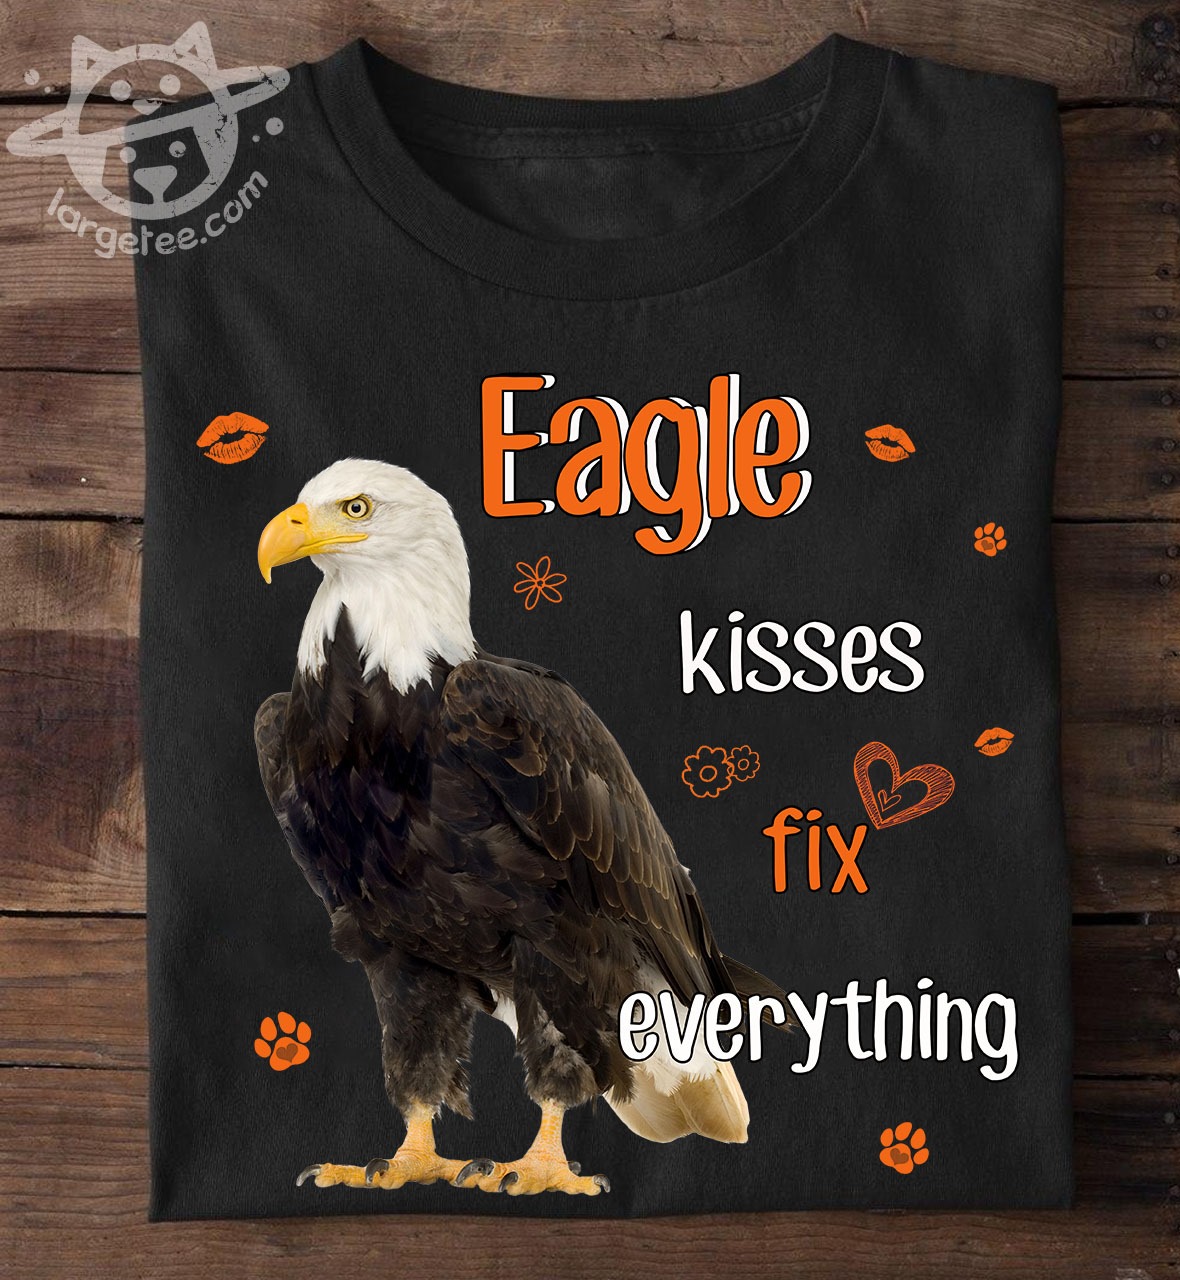 Eagle kisses fix everything - Eagle lover